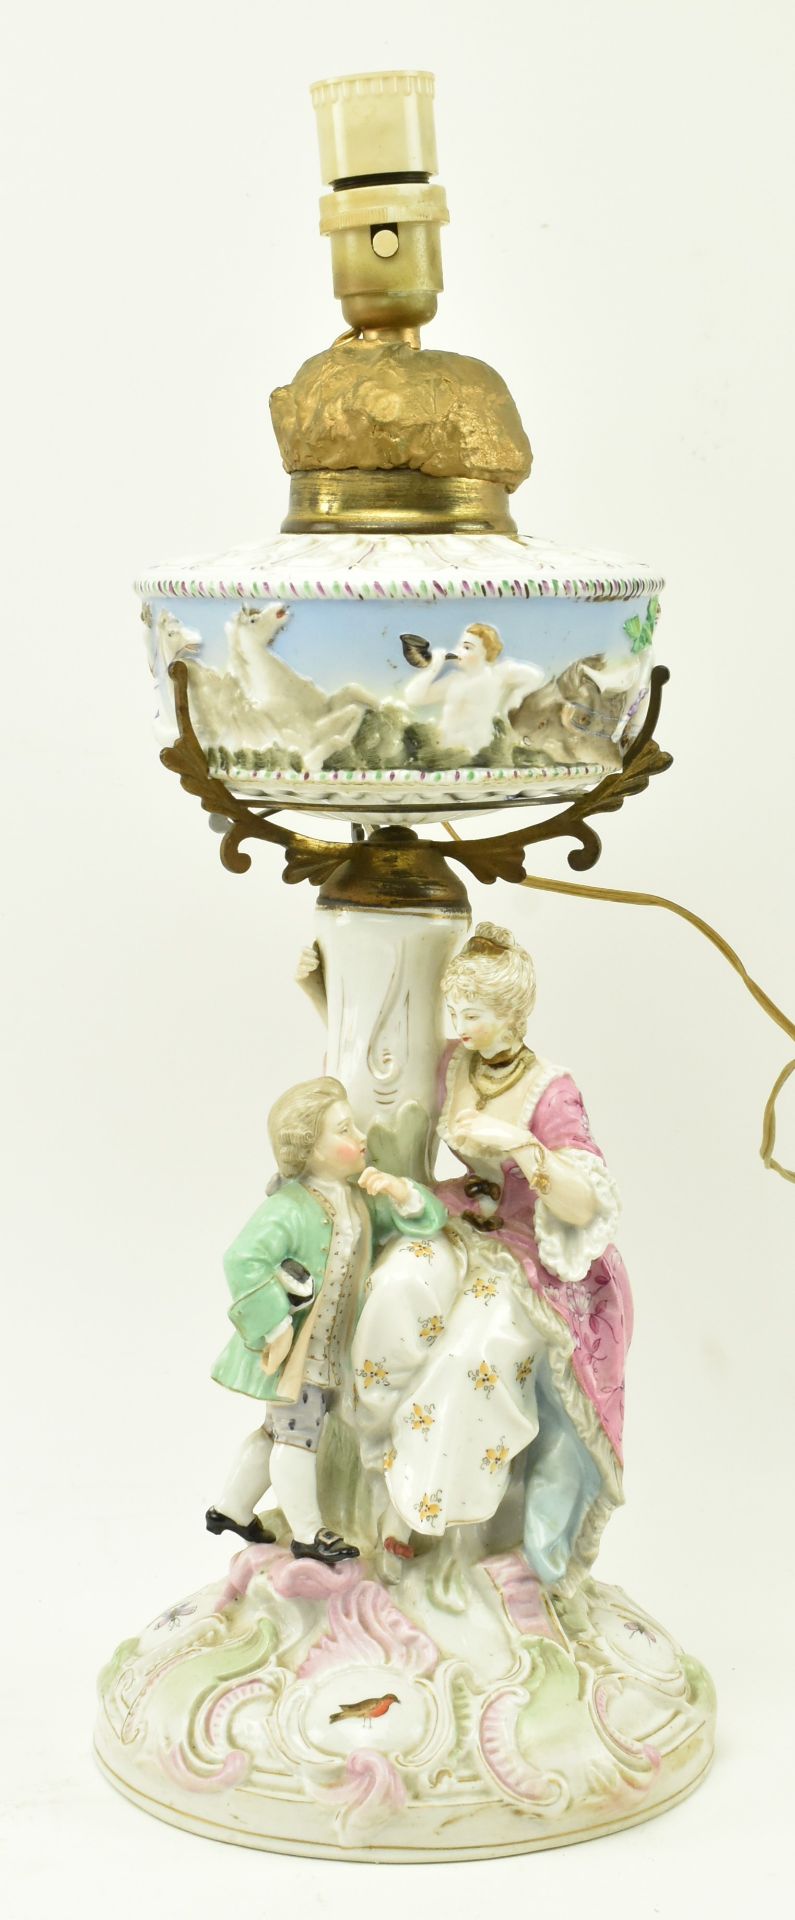 LATE 19TH CENTURY LUIGI TINELLI SAN CRISTOFORO CERAMIC LAMP